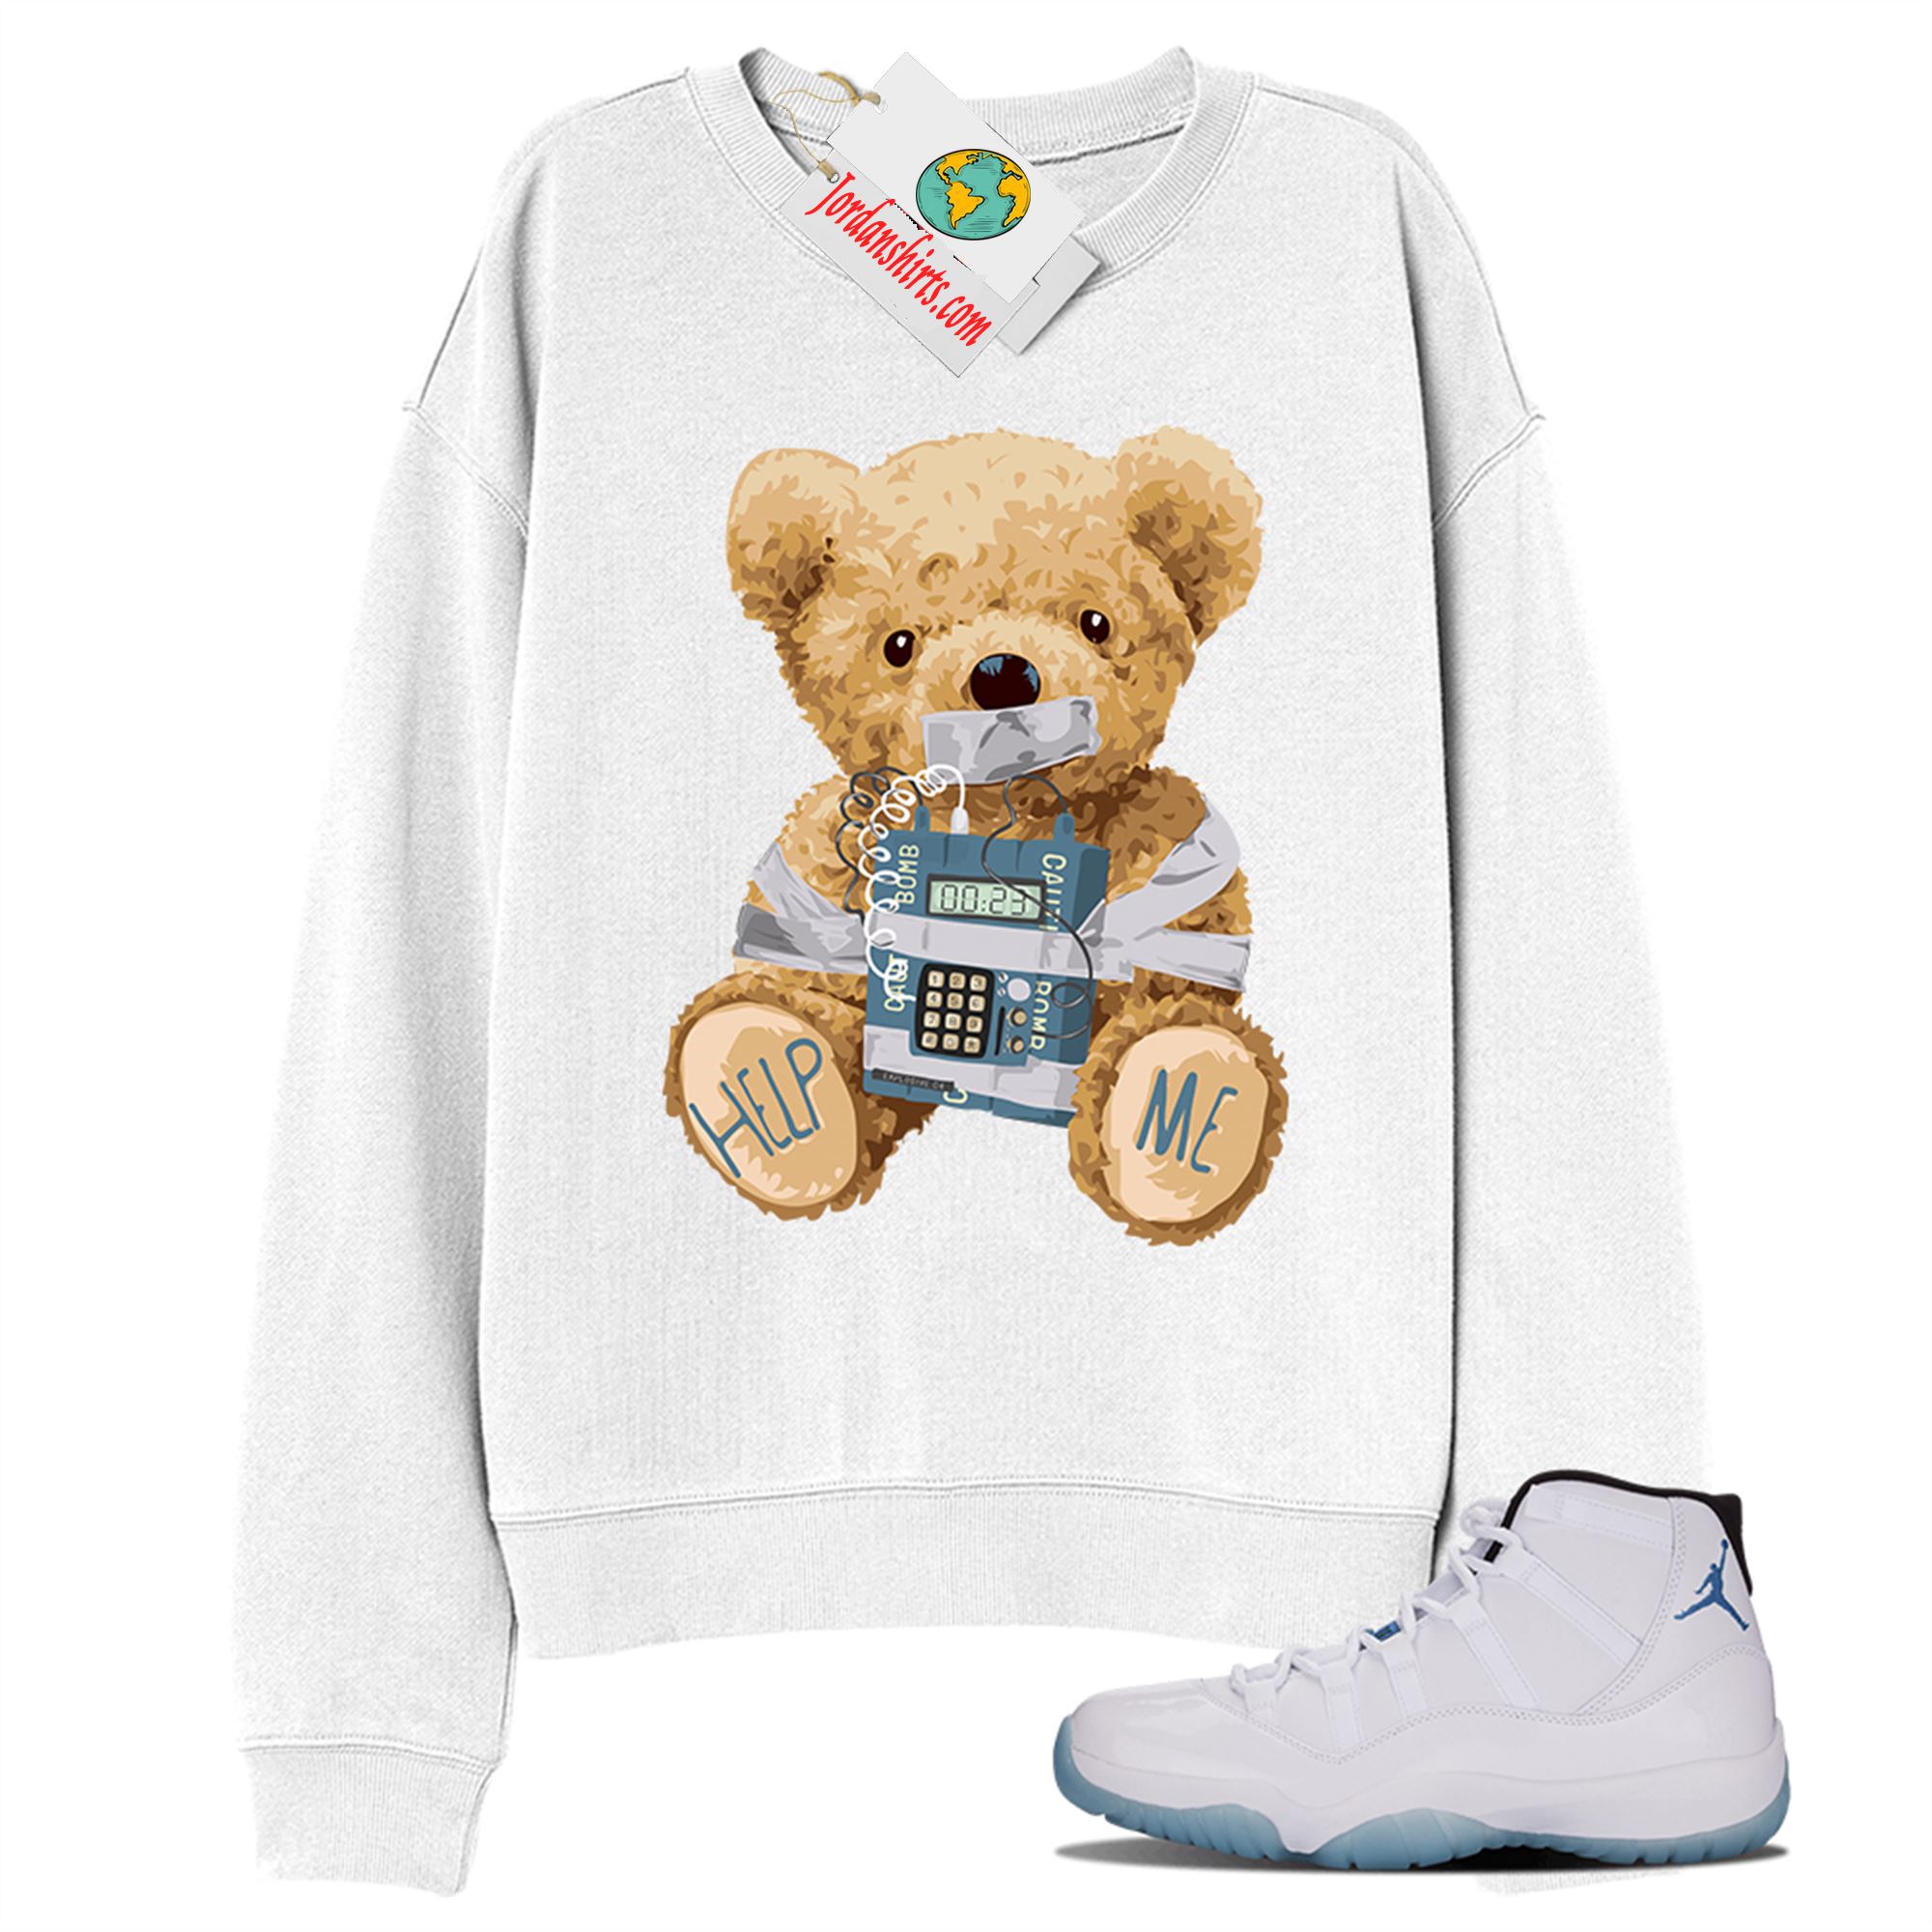 Jordan 11 Sweatshirt, Teddy Bear Bomb White Sweatshirt Air Jordan 11 Legend Blue 11s Full Size Up To 5xl